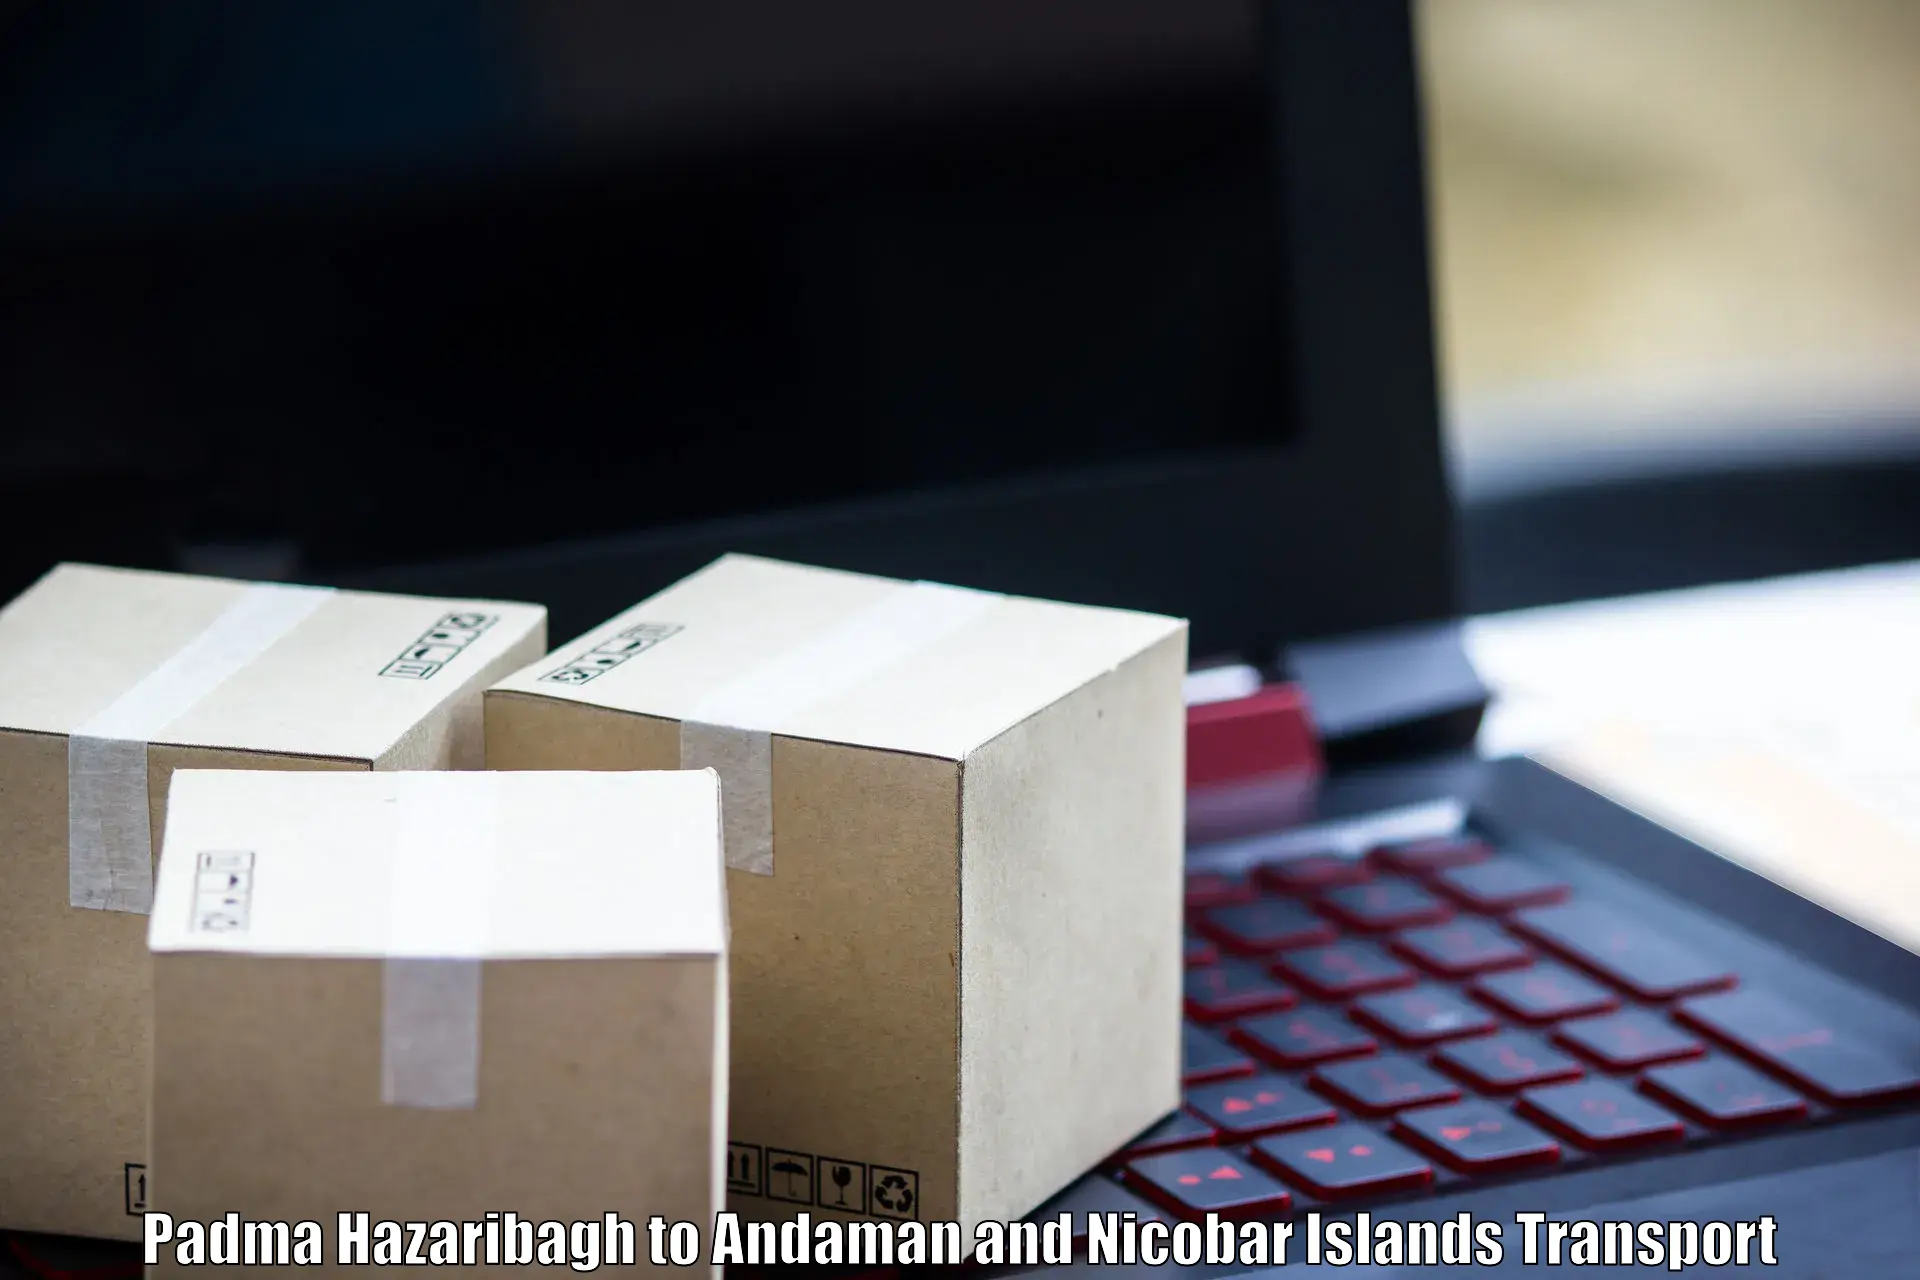 Shipping partner Padma Hazaribagh to Nicobar